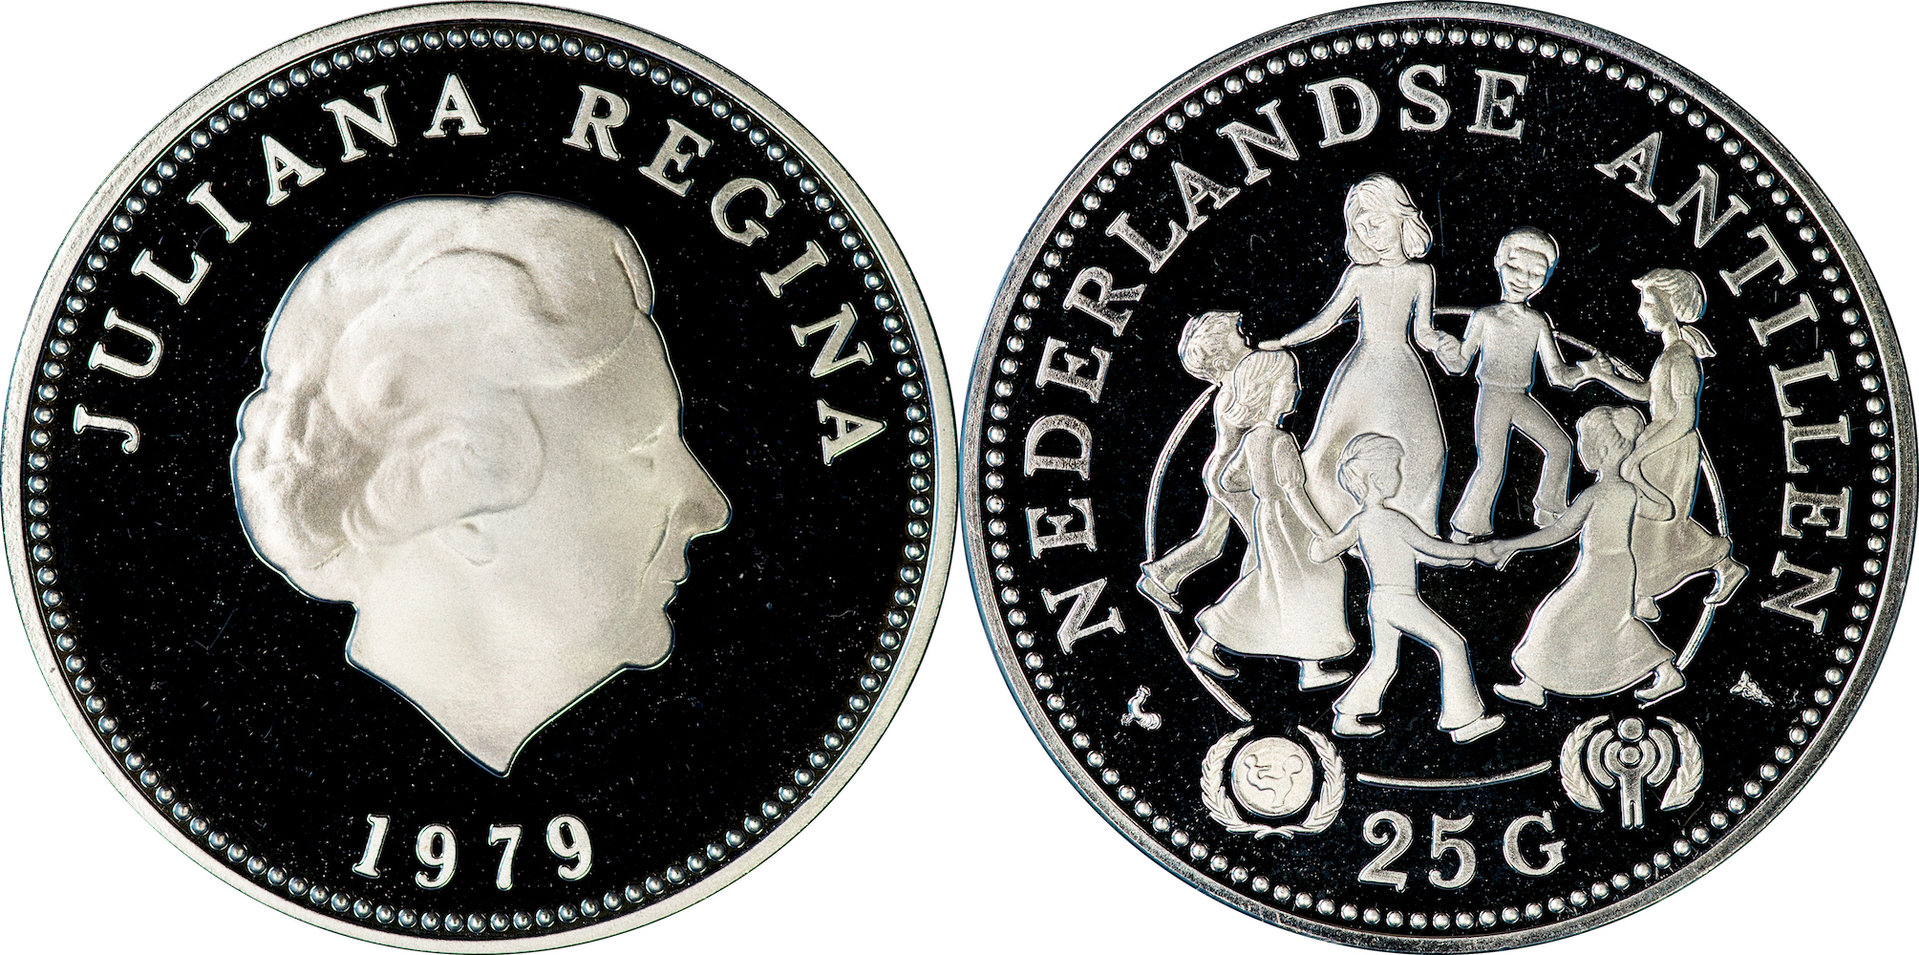 Netherlands Antilles - 1979 25 Gulden.jpg